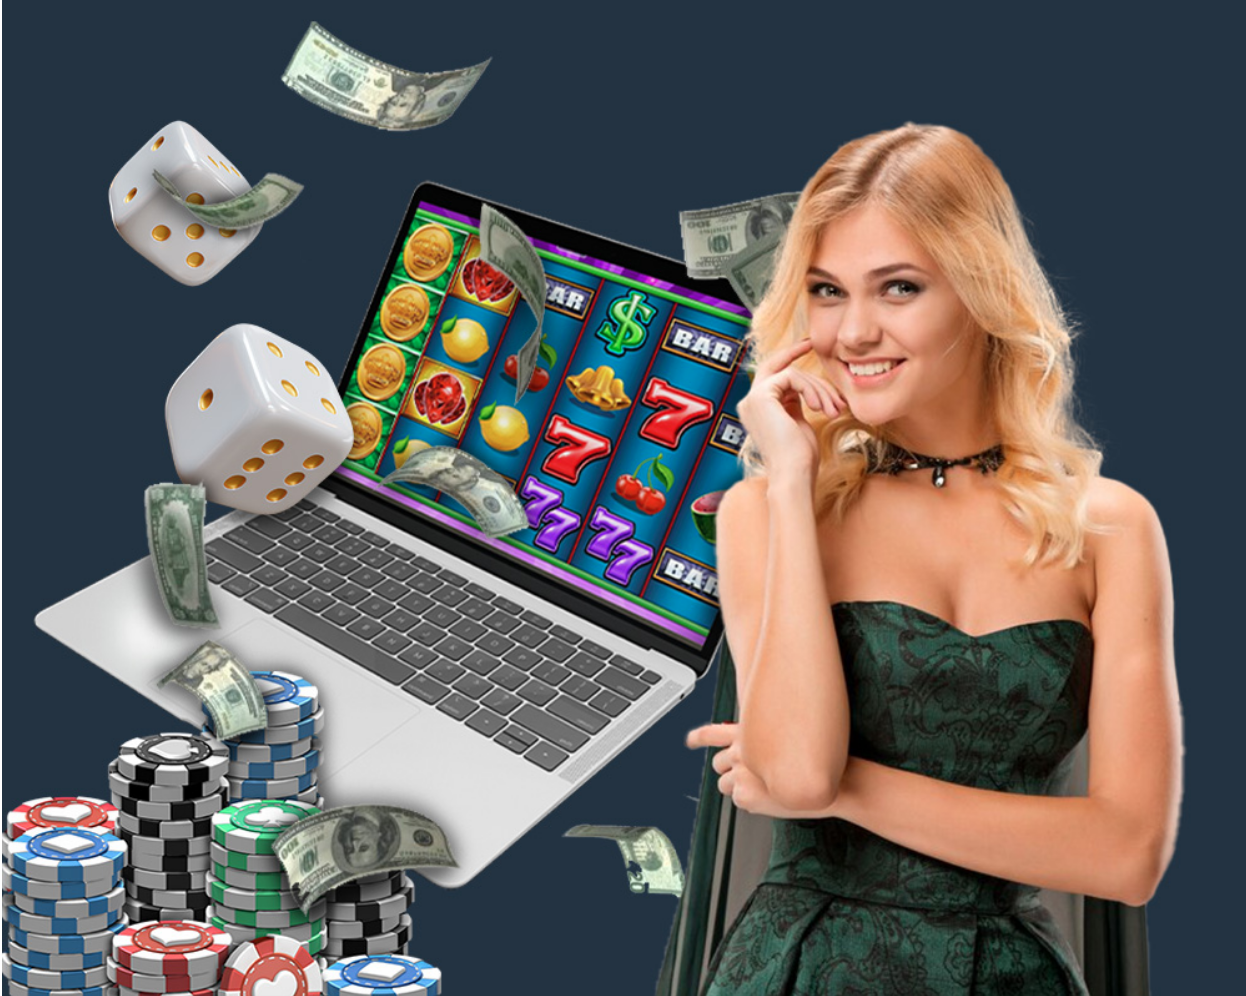 laptop-casino-gambling-woman.png